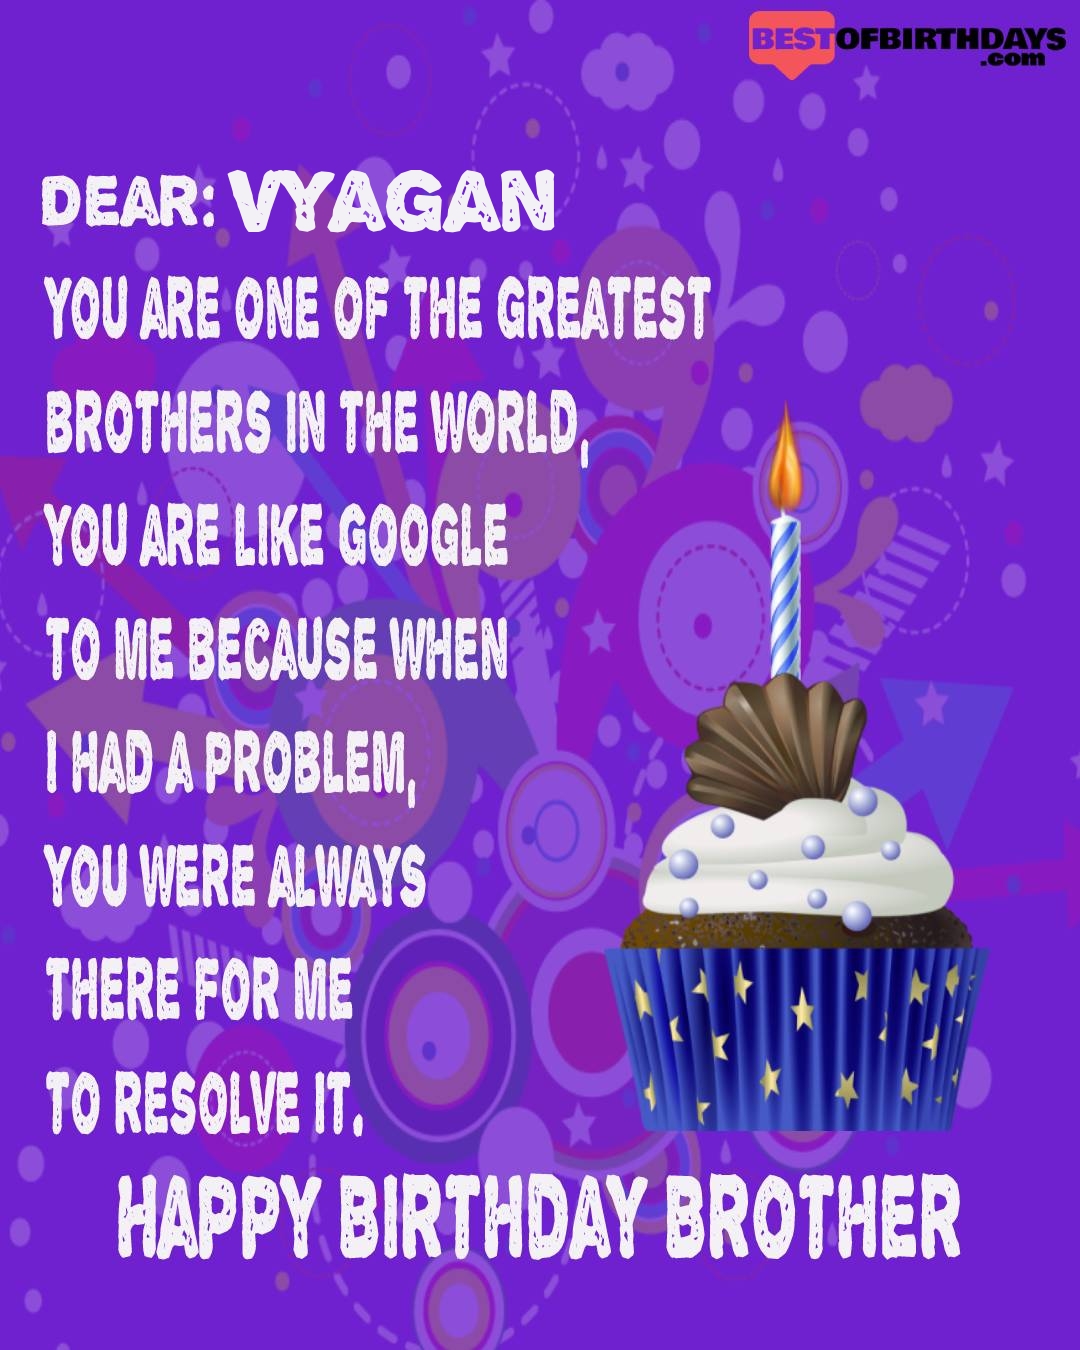 Happy birthday vyagan bhai brother bro